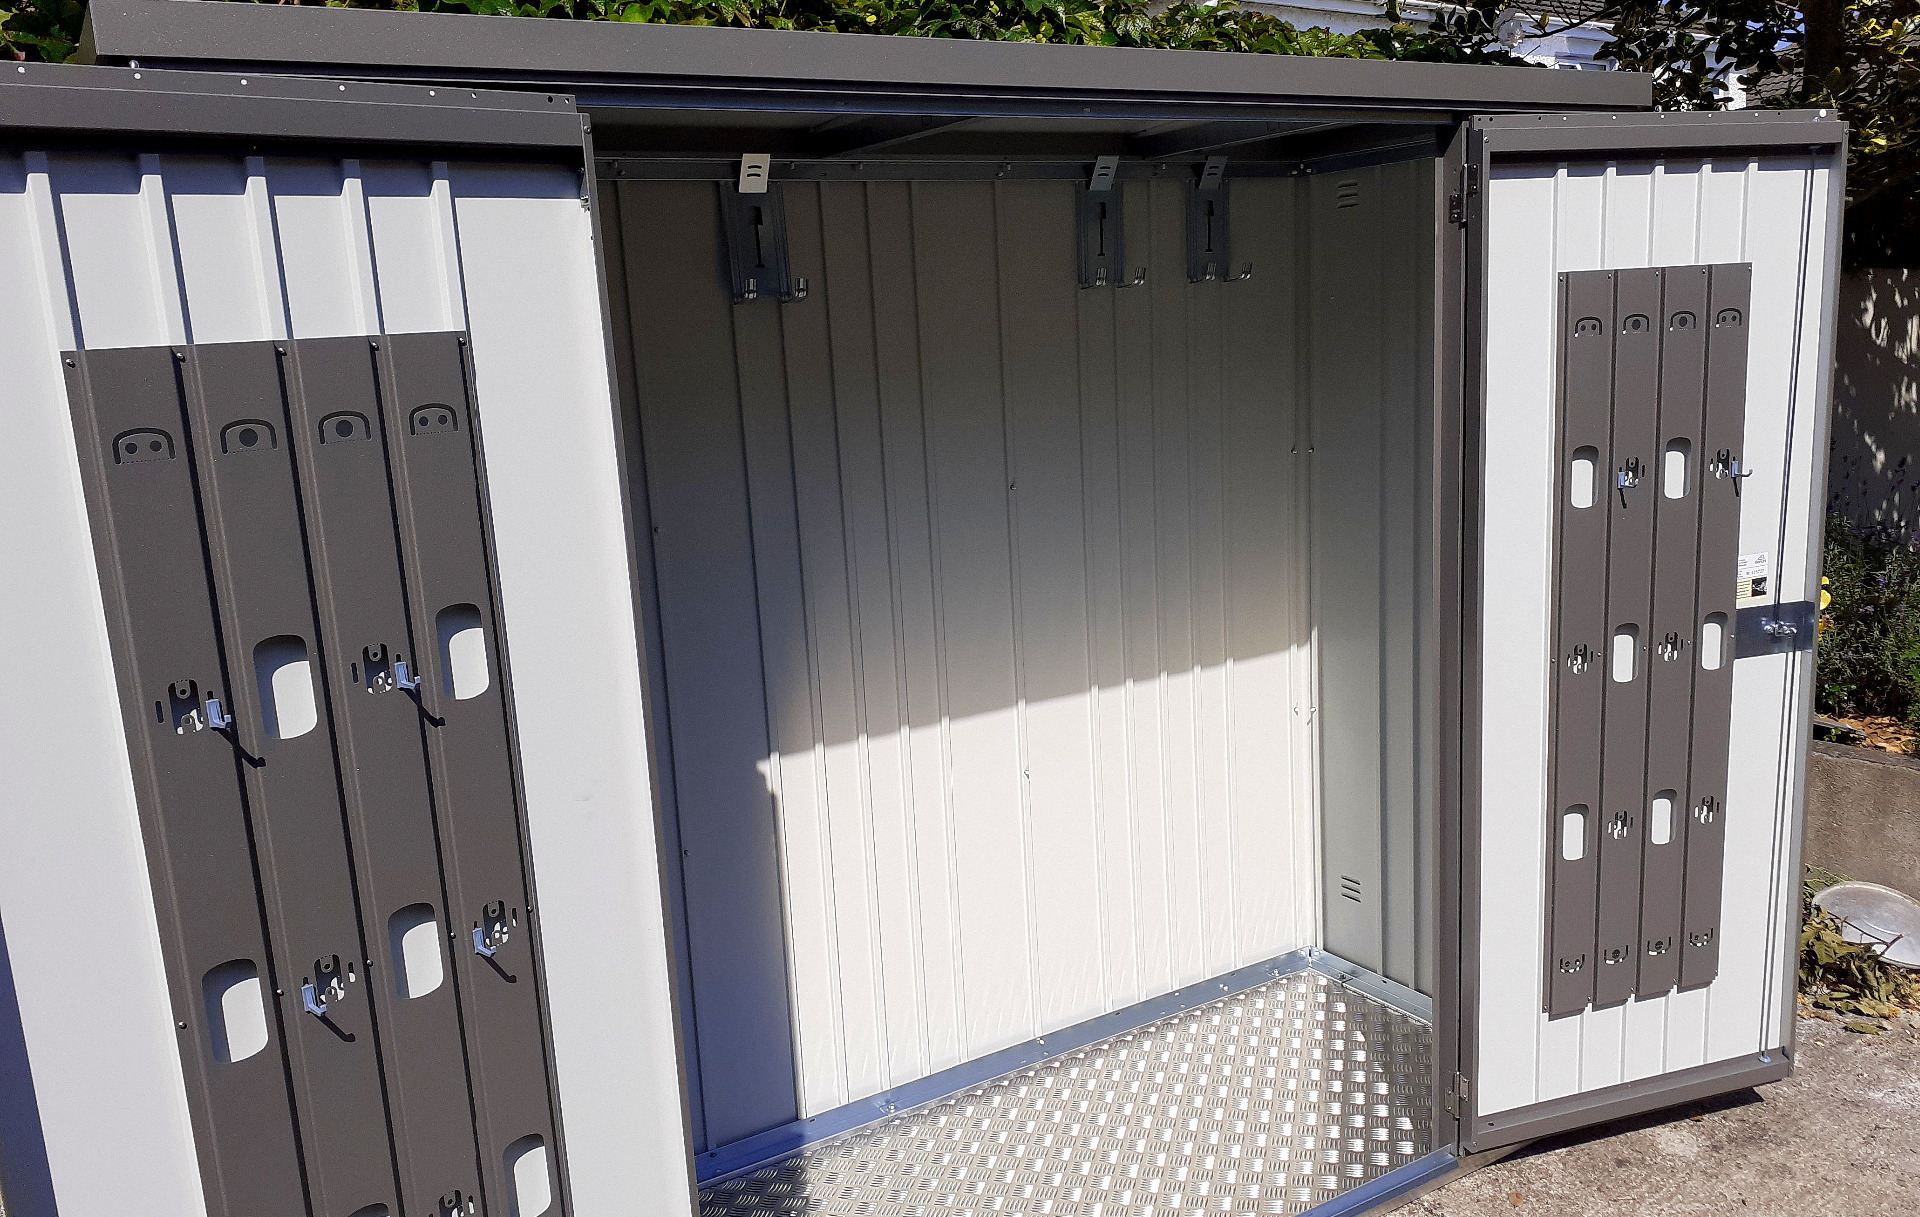 The Biohort Equipment Locker 230 Garden Storage with aluminium floor frame and aluminium floor panels as accessories| in stock and on SALE now at Owen Chubb GardenStudio, Tel 087-2306 128